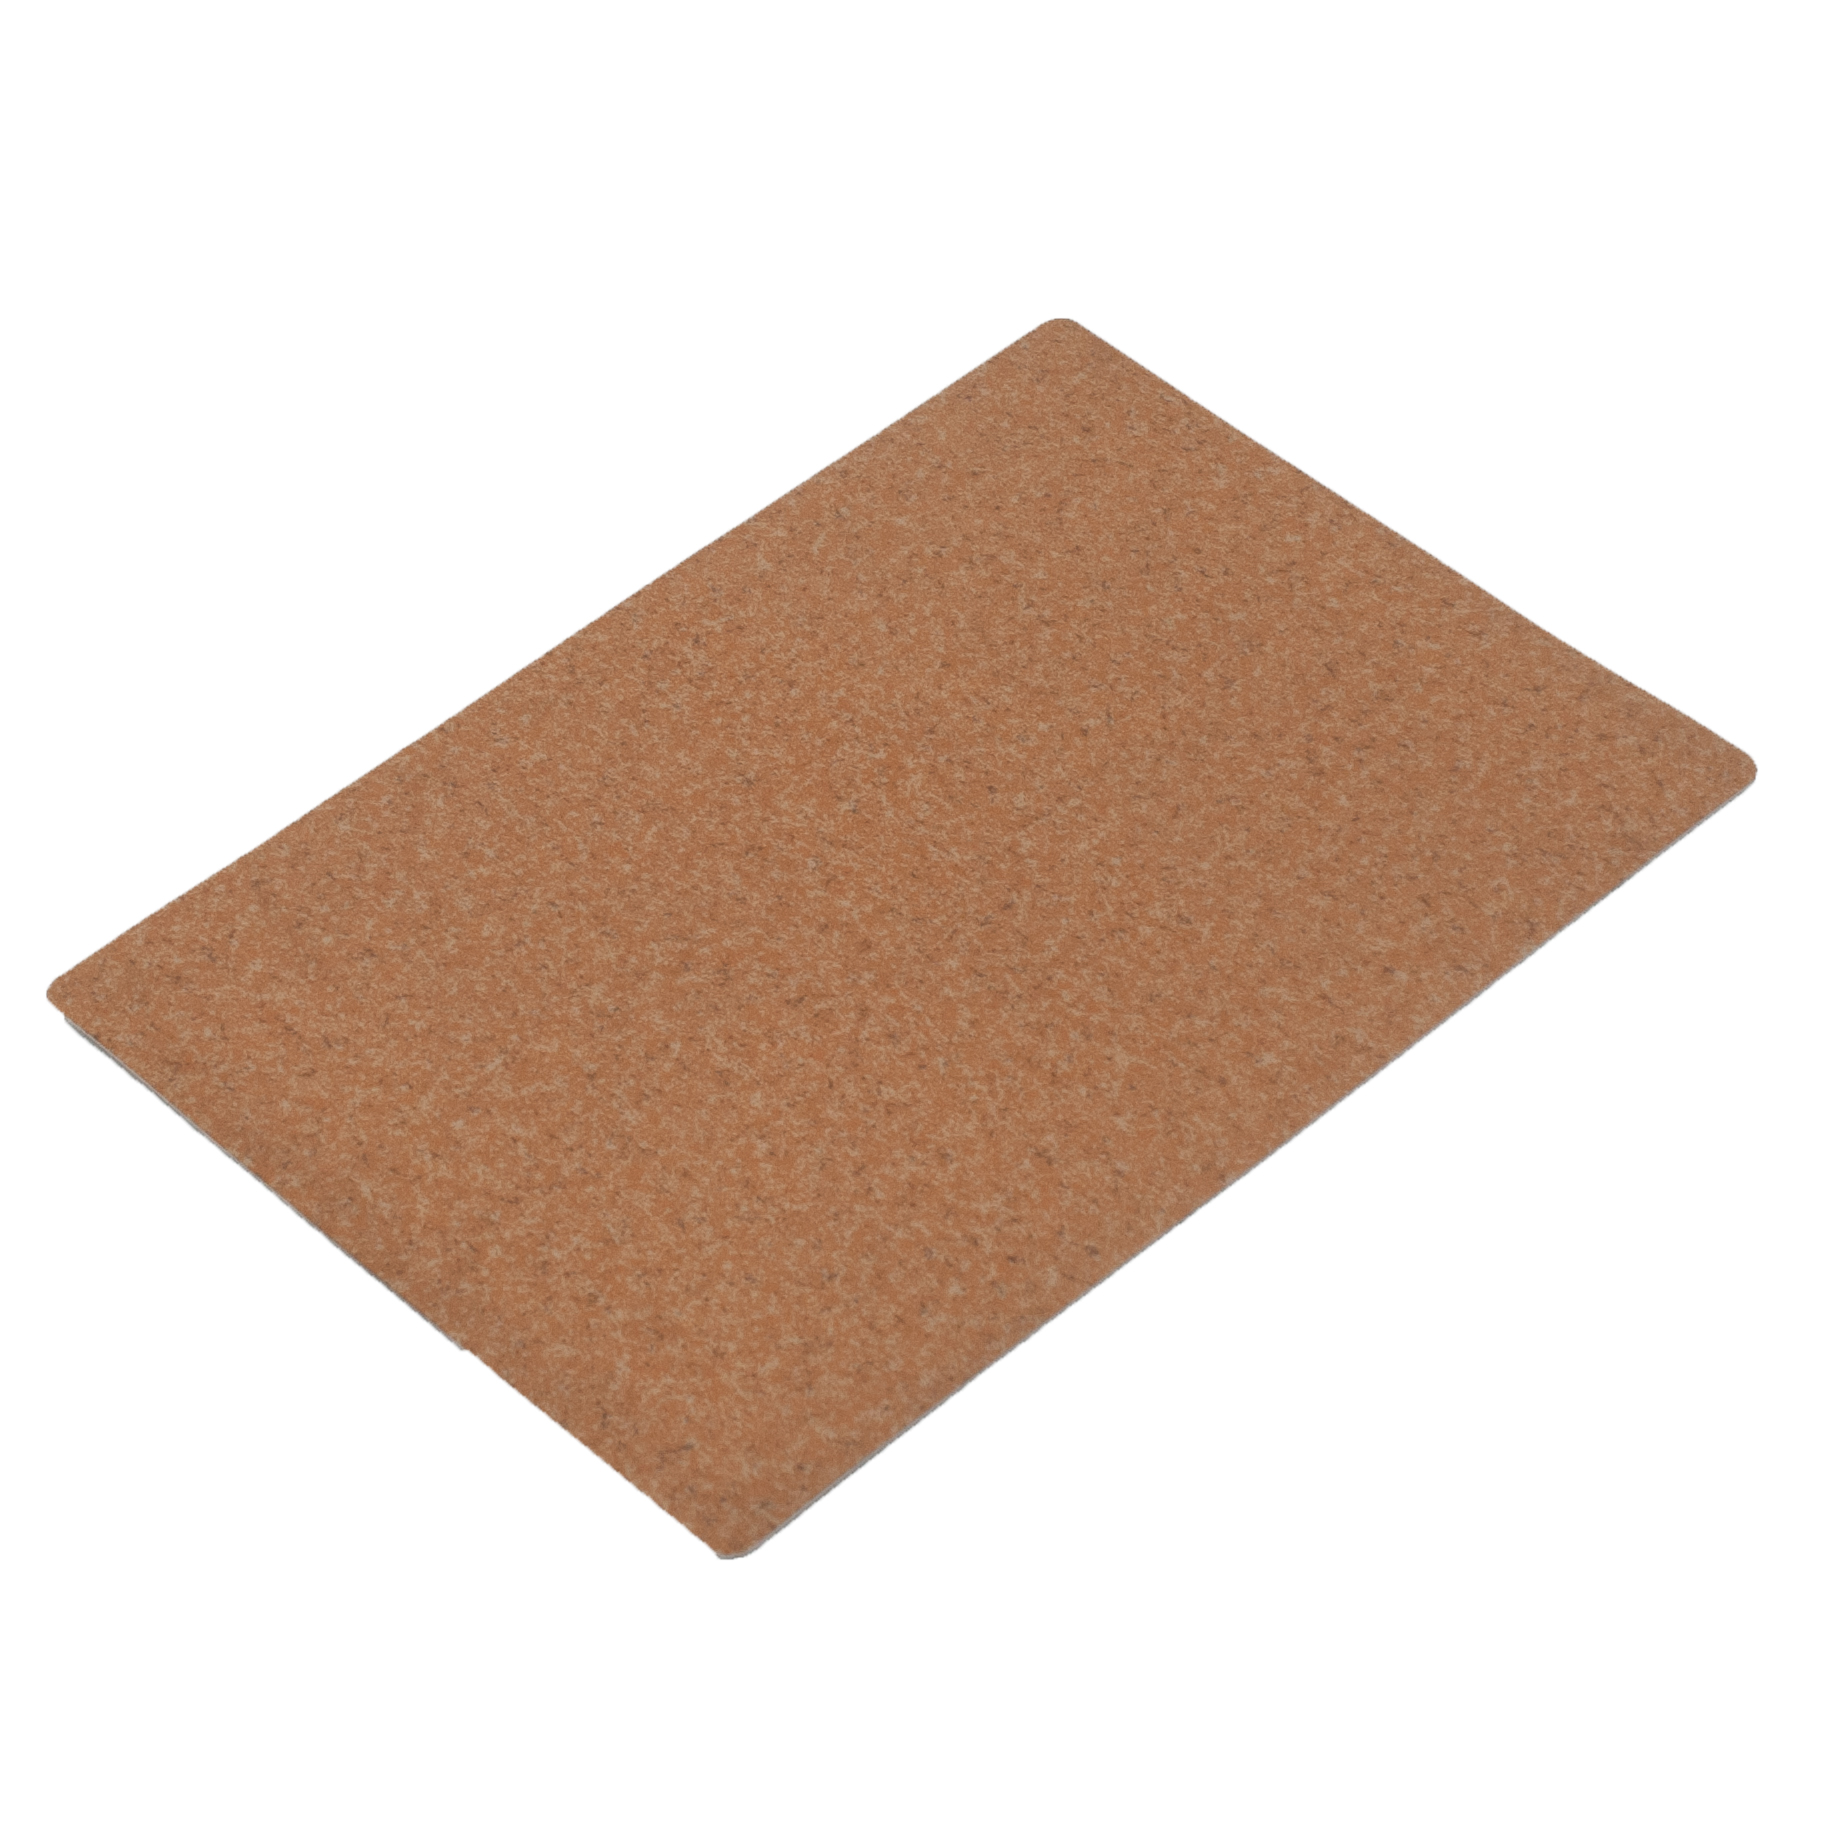 Textured Standard Size PVC Flooring For Basement